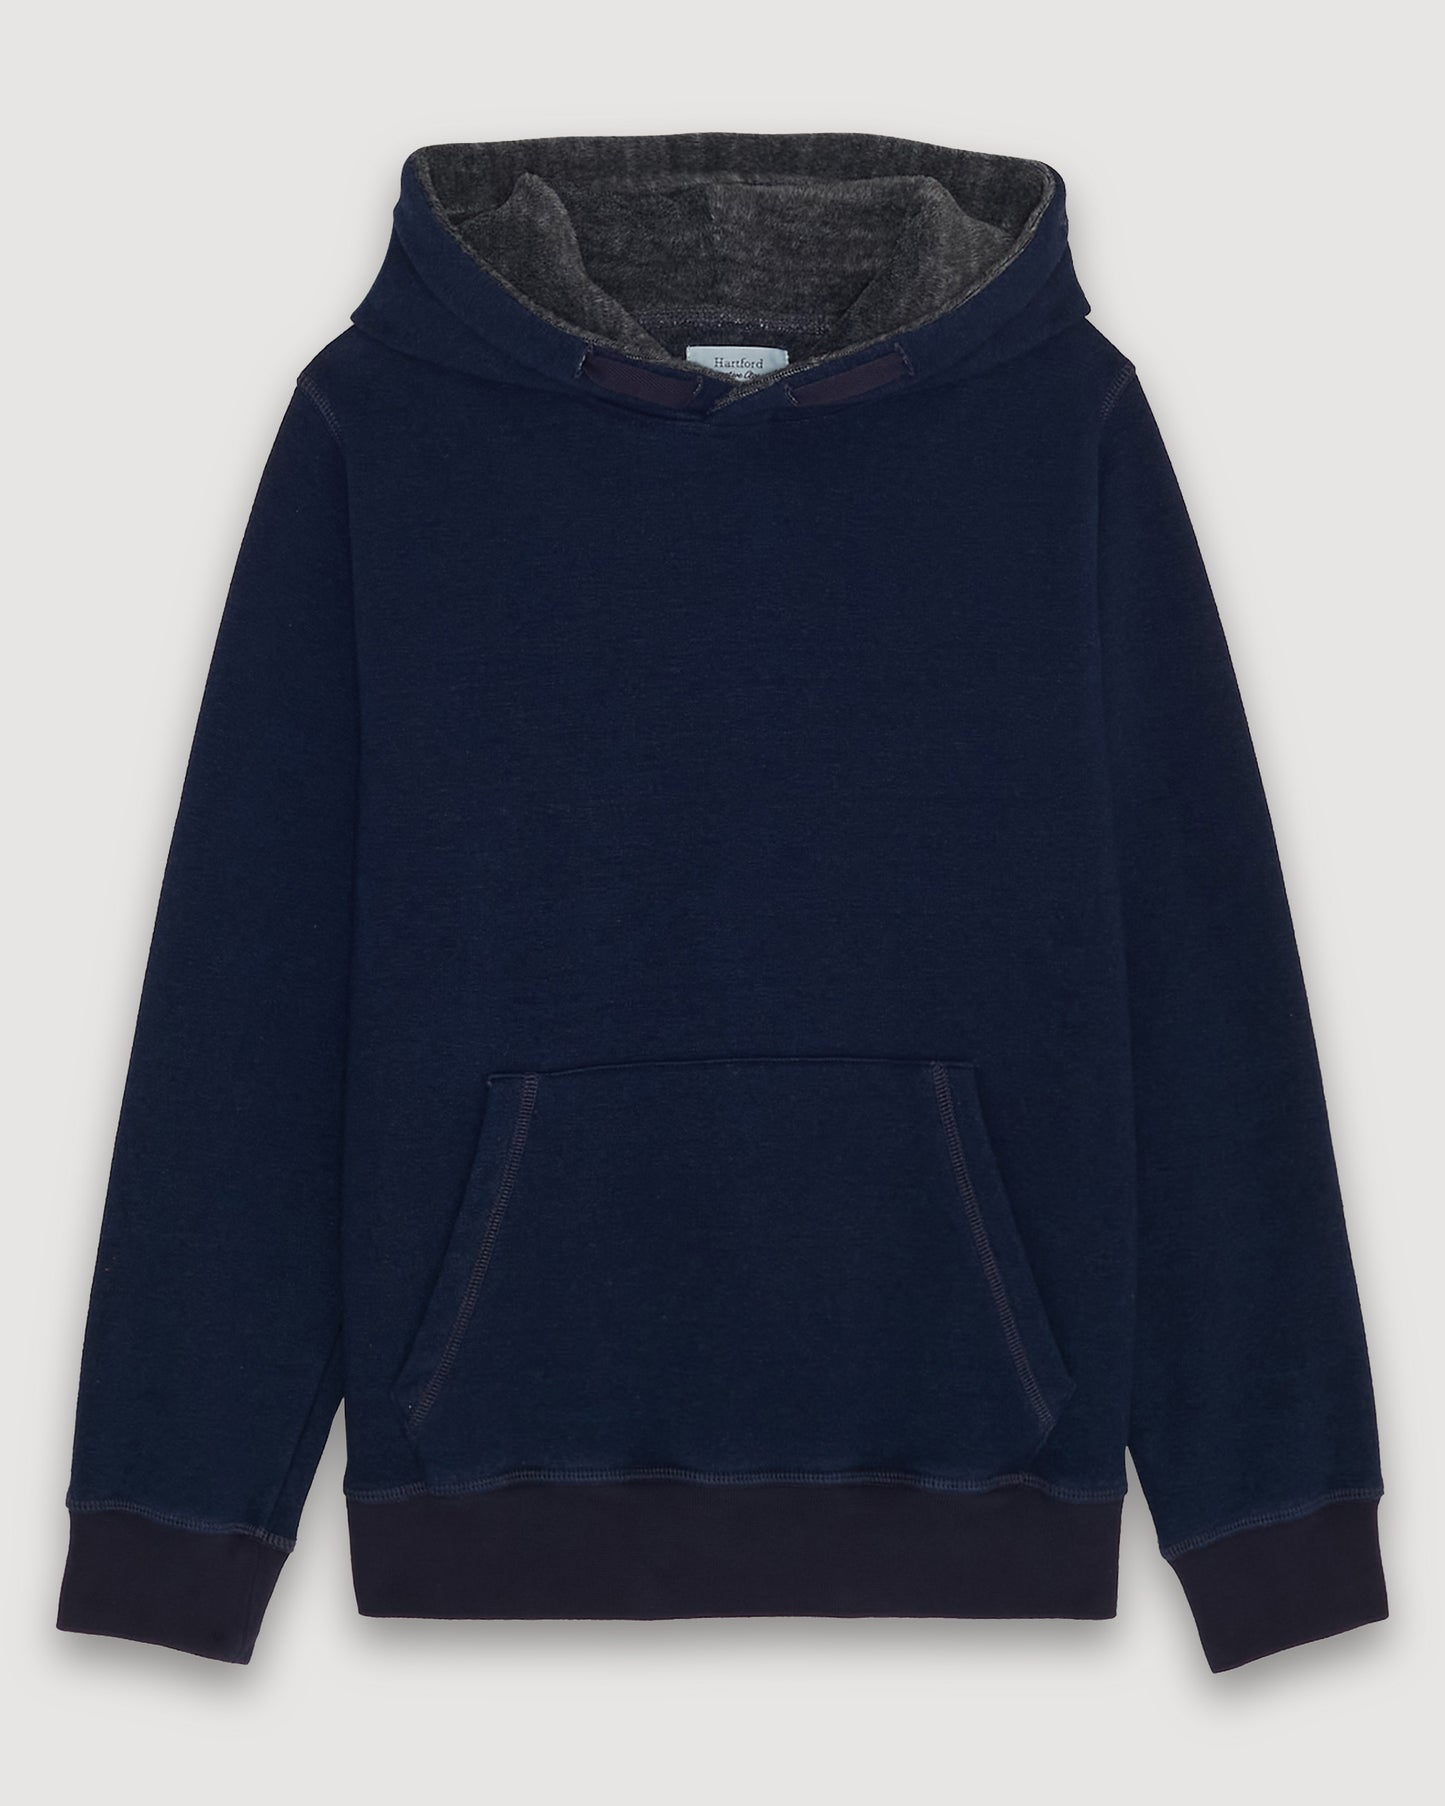 Sweatshirt à capuche Garcon en molleton & polaire Indigo BCTAR306-01